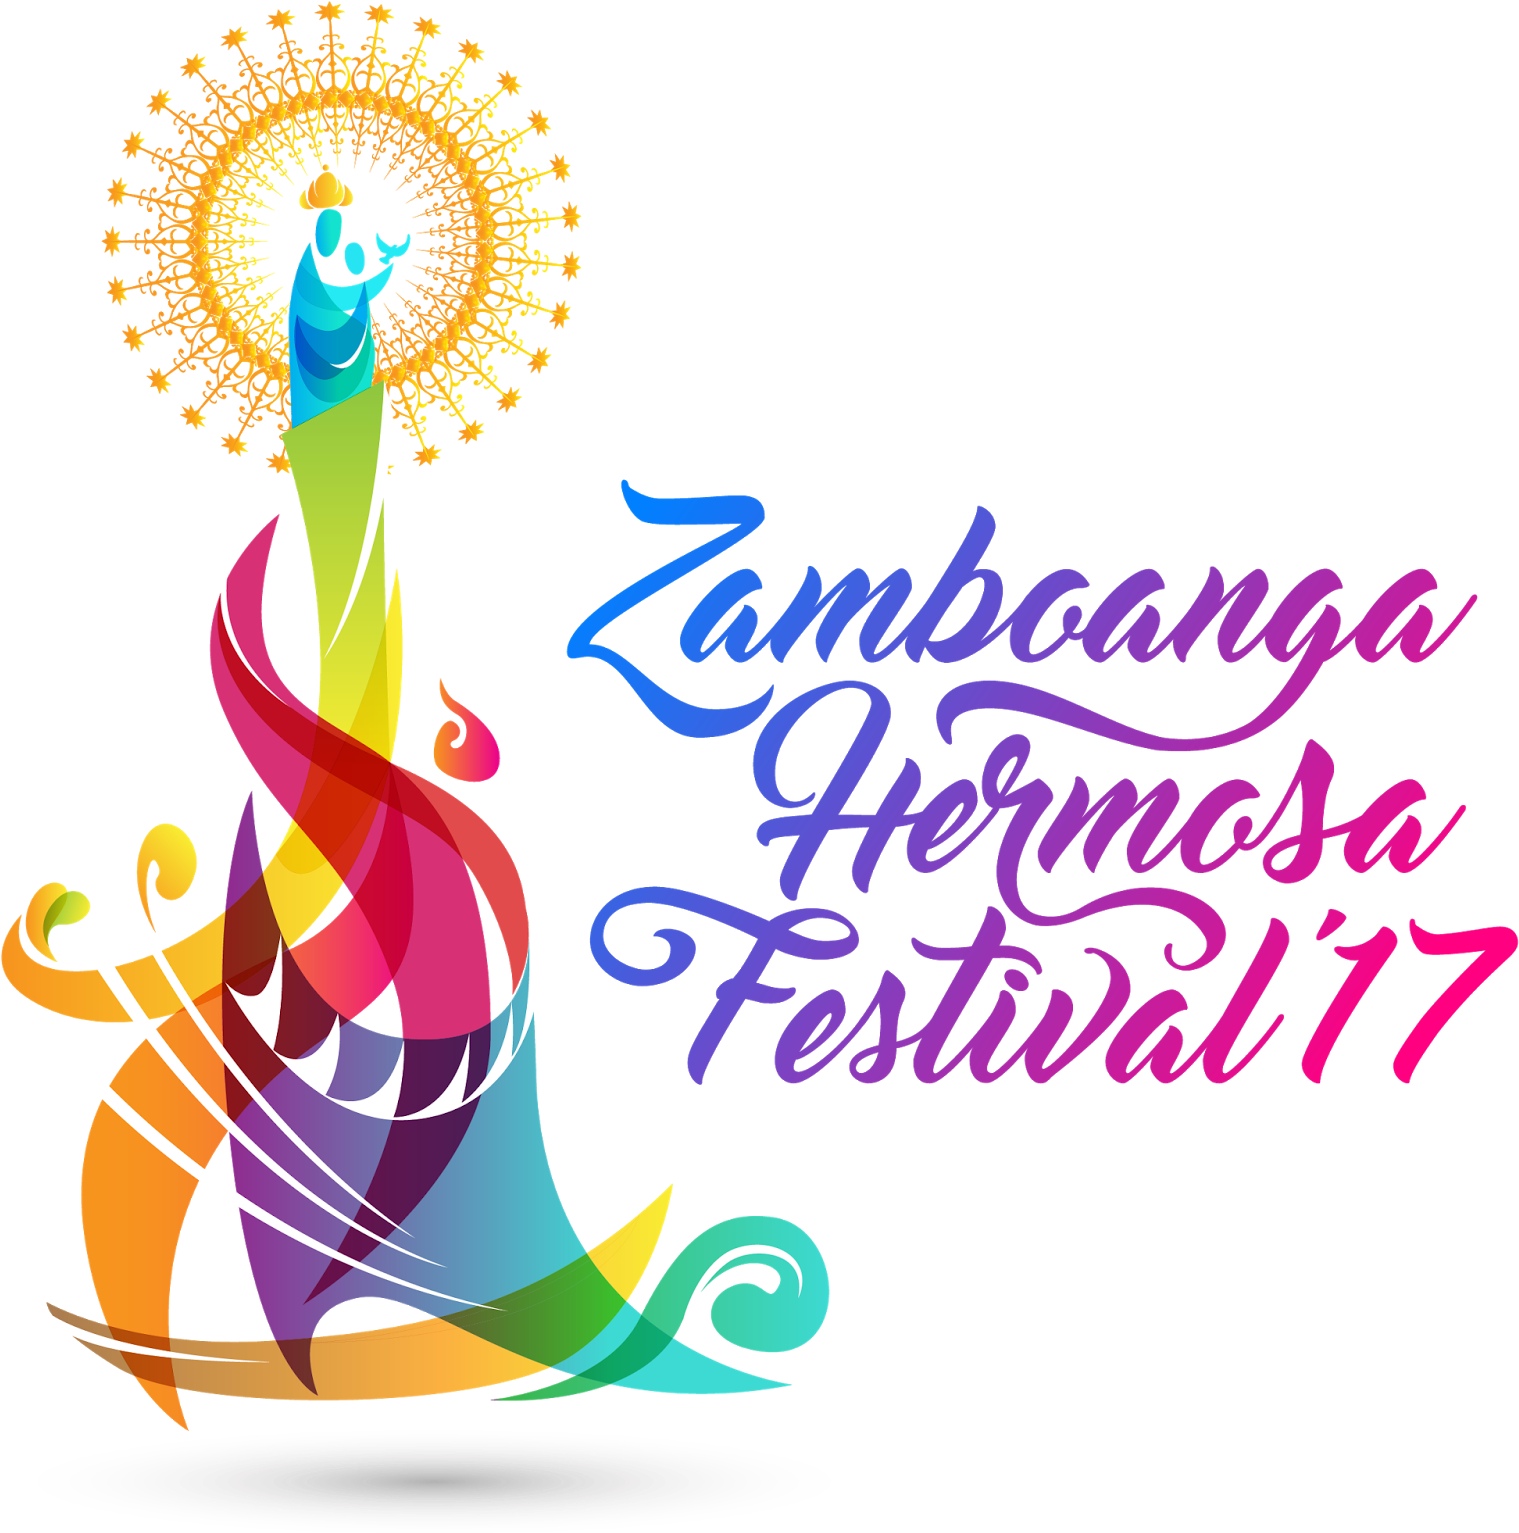 Zamboanga Hermosa Festival 2017 Logo Fiesta Pilar - Zamboanga Hermosa Festival 2017 (1600x1572)